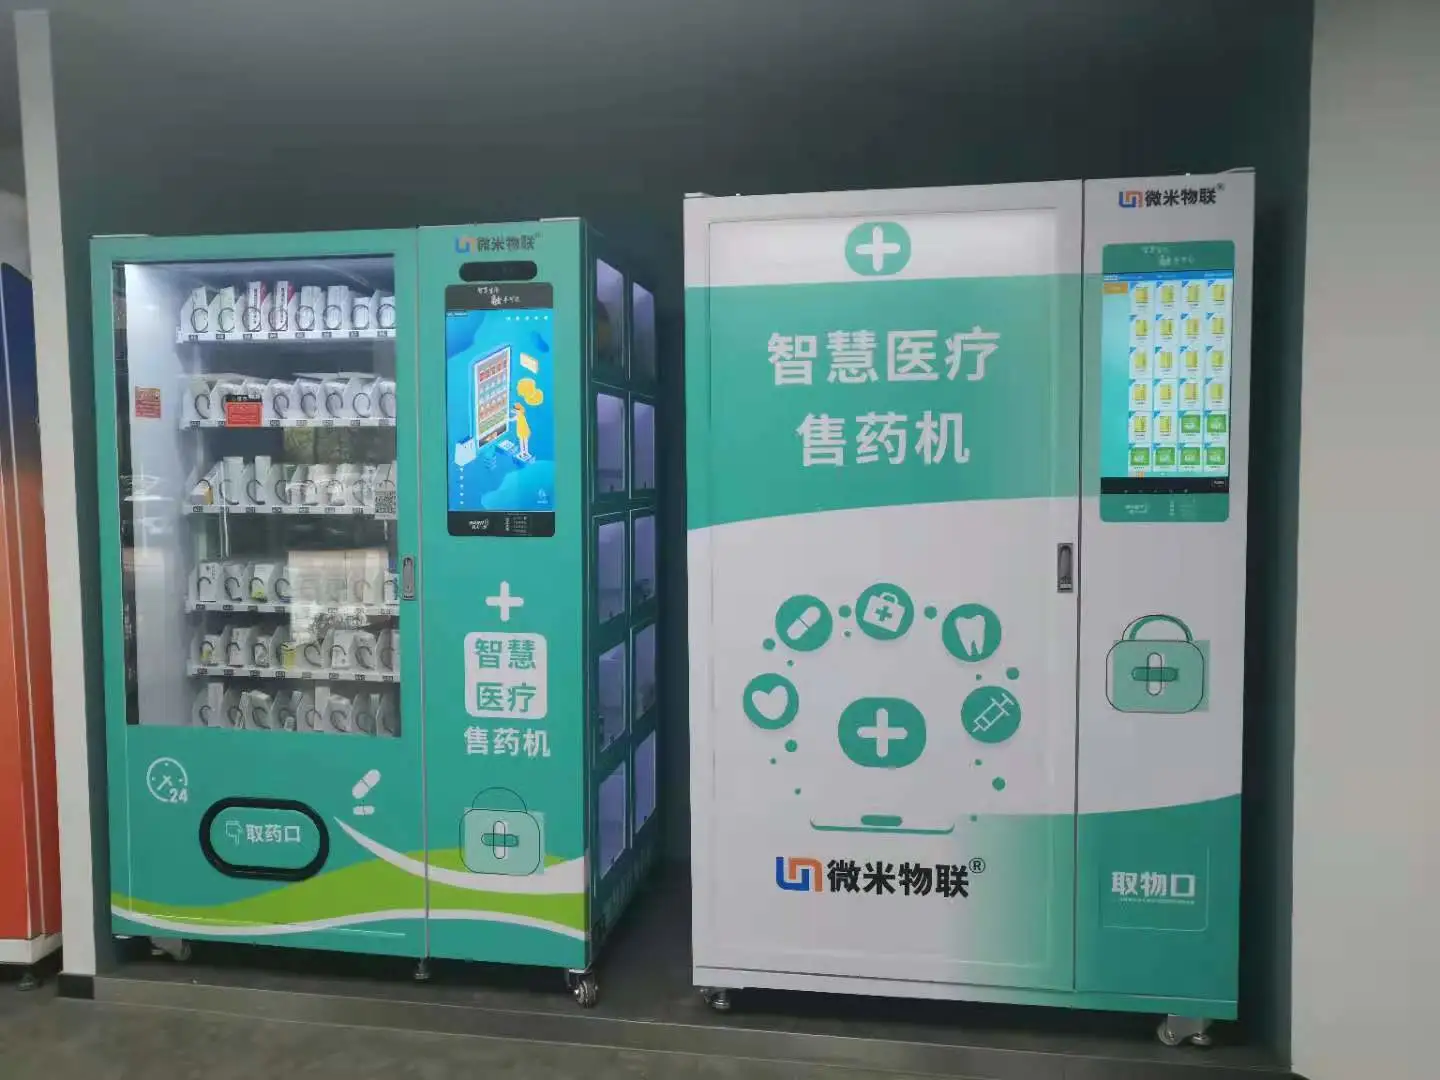 24-Hour Medicine Vending Machine-The Future of Healthcare